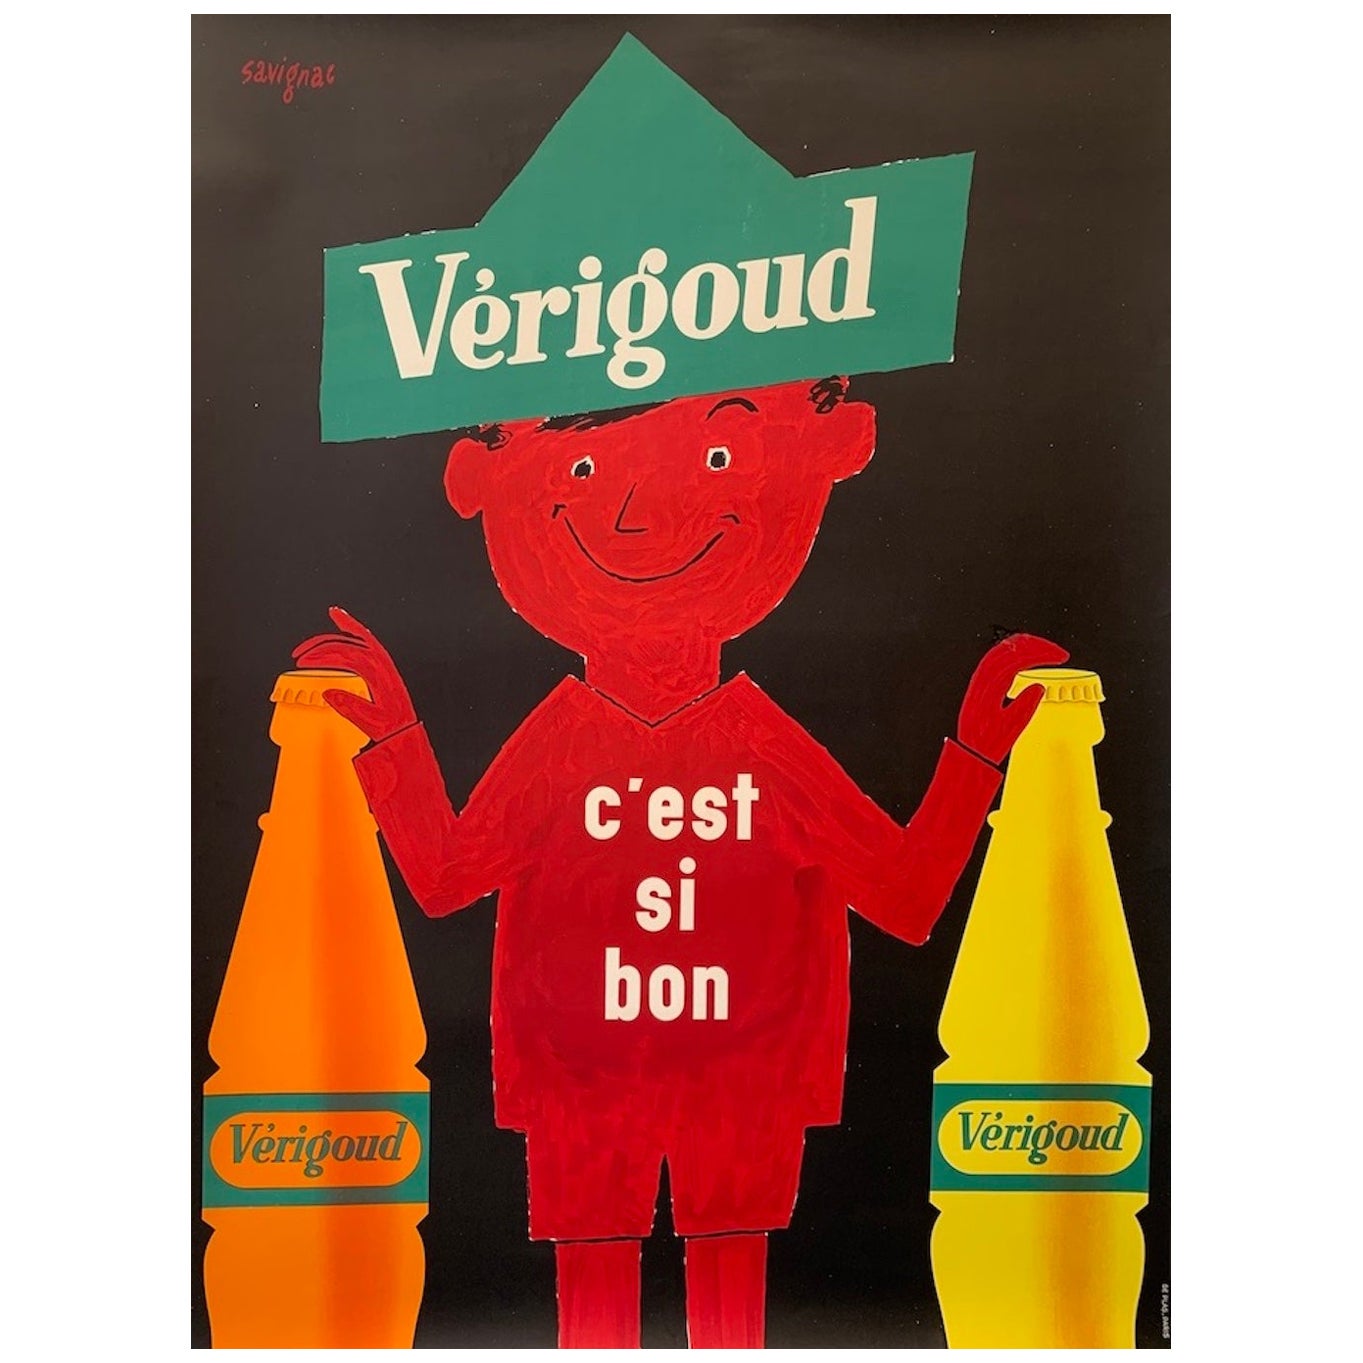 Original Vintage French Advertising Poster, Verigoud by Savignac, 1955 For Sale